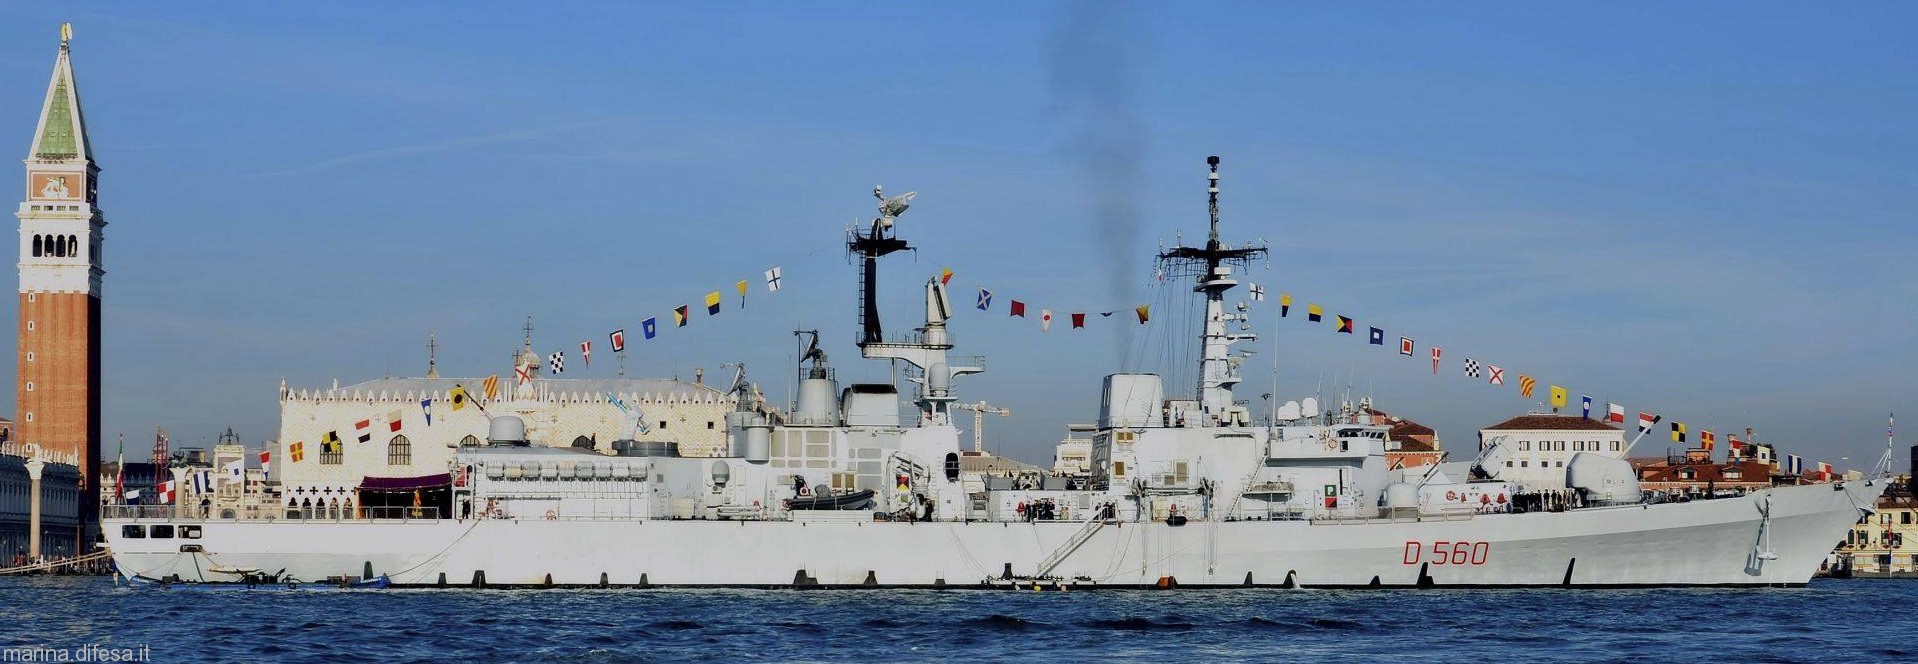 d-560 luigi durand de la penne its nave guided missile destroyer ddg italian navy marina militare 22 venice